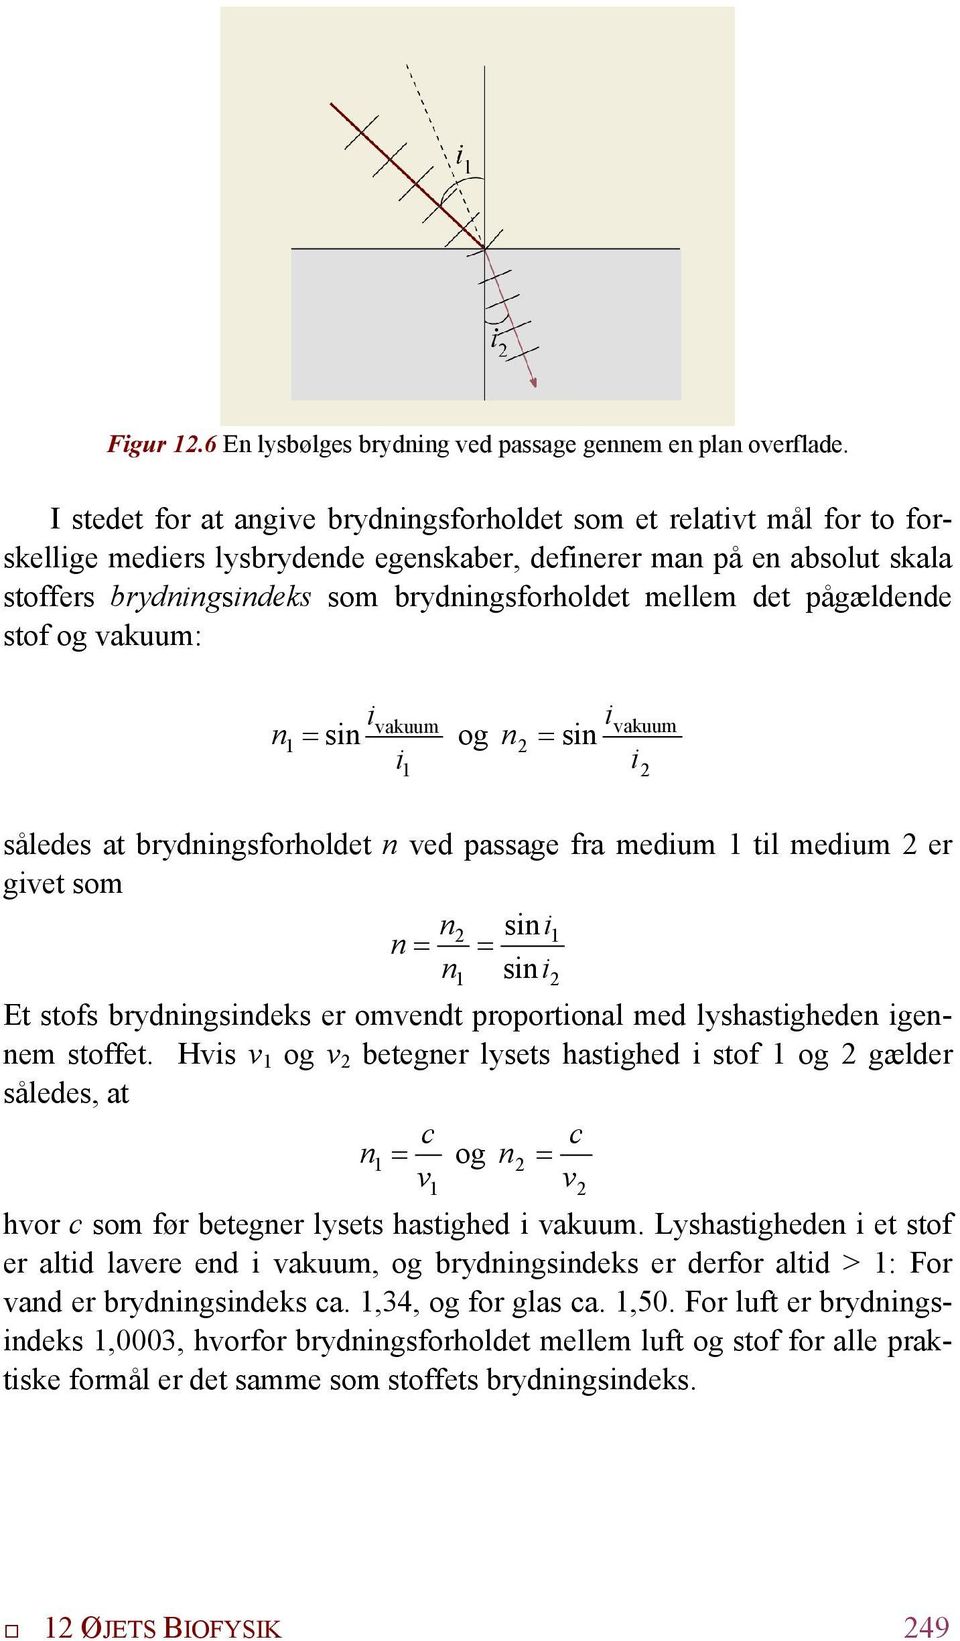 12 Øjets Biofysik 12 ØJETS BIOFYSIK PDF Gratis download